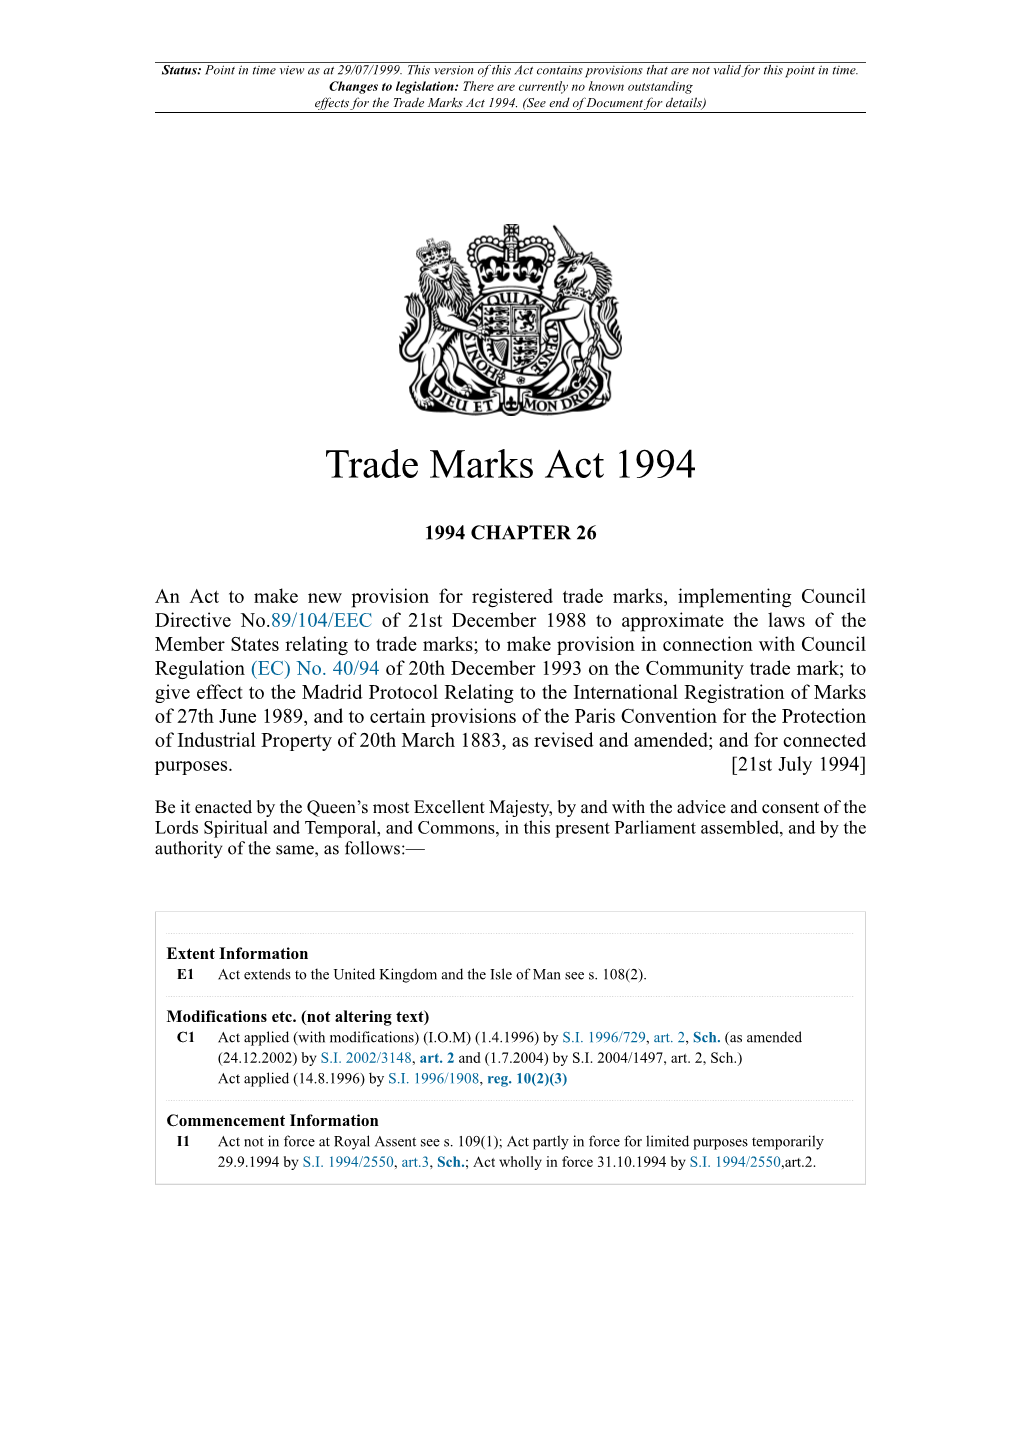 Trade Marks Act 1994